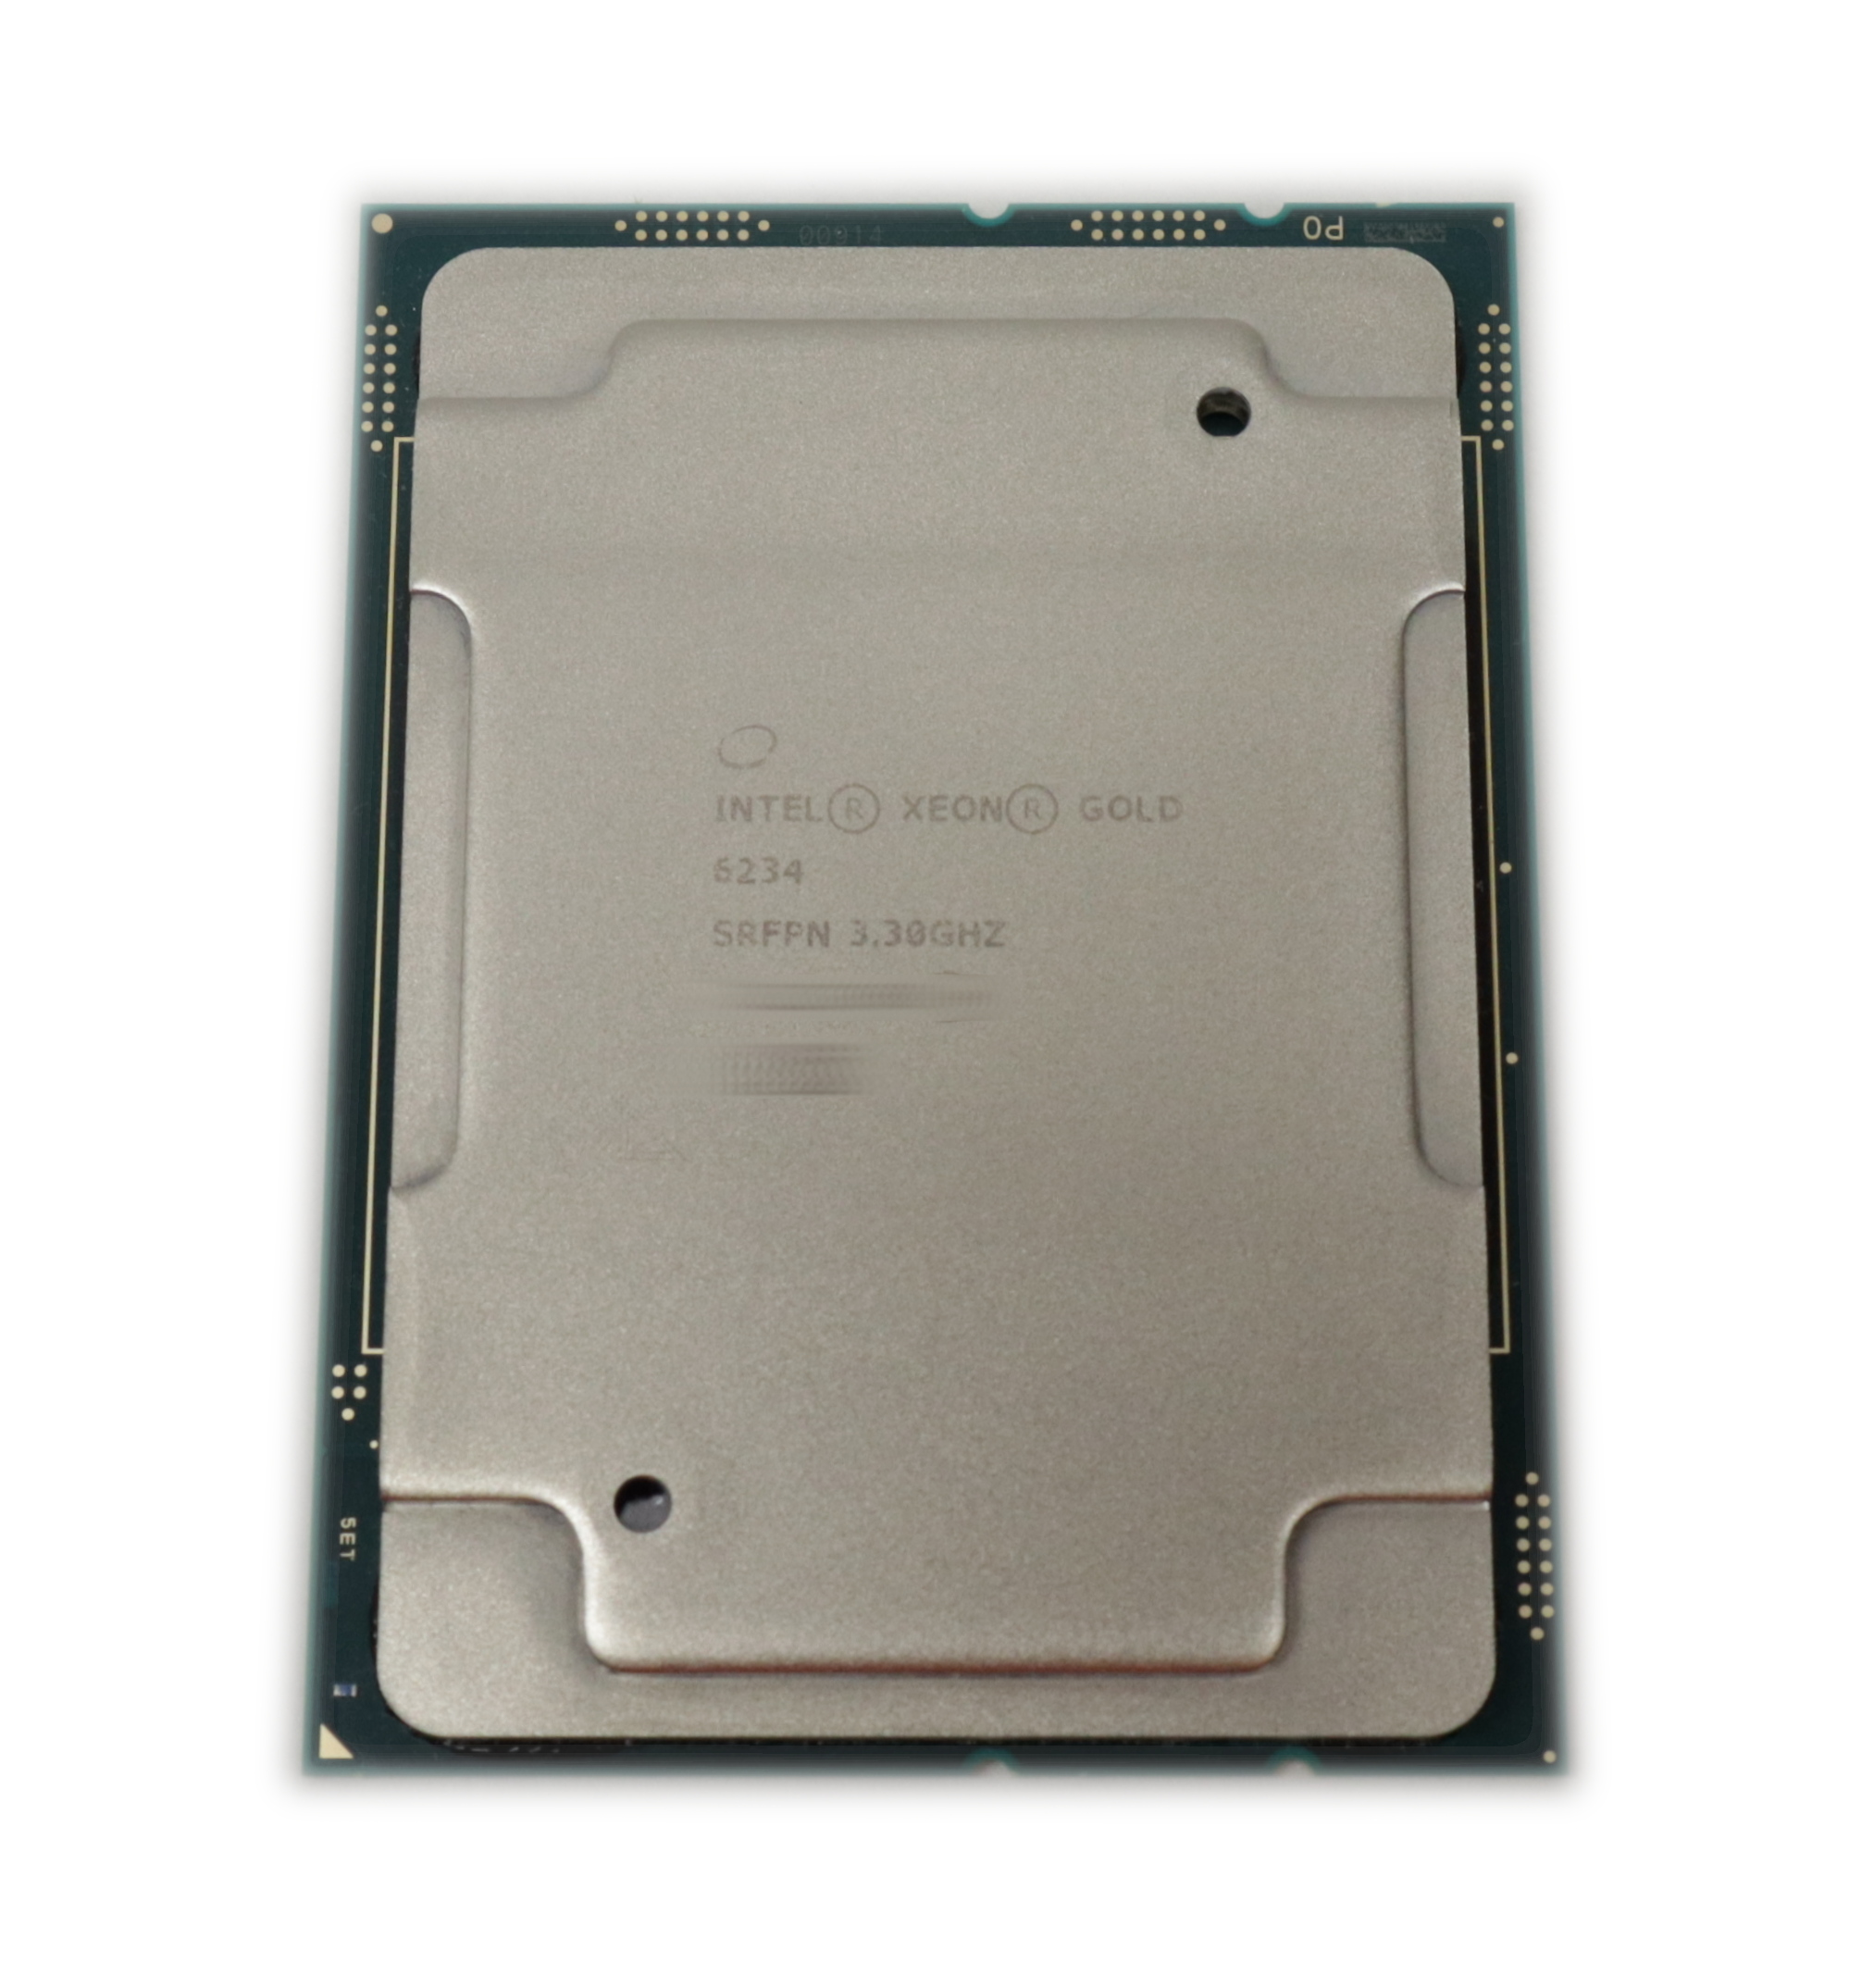 Intel Xeon Gold 6234 3.3GHz 8C 16T 24.75M Cache Sockets FCLGA3647 SRFPN